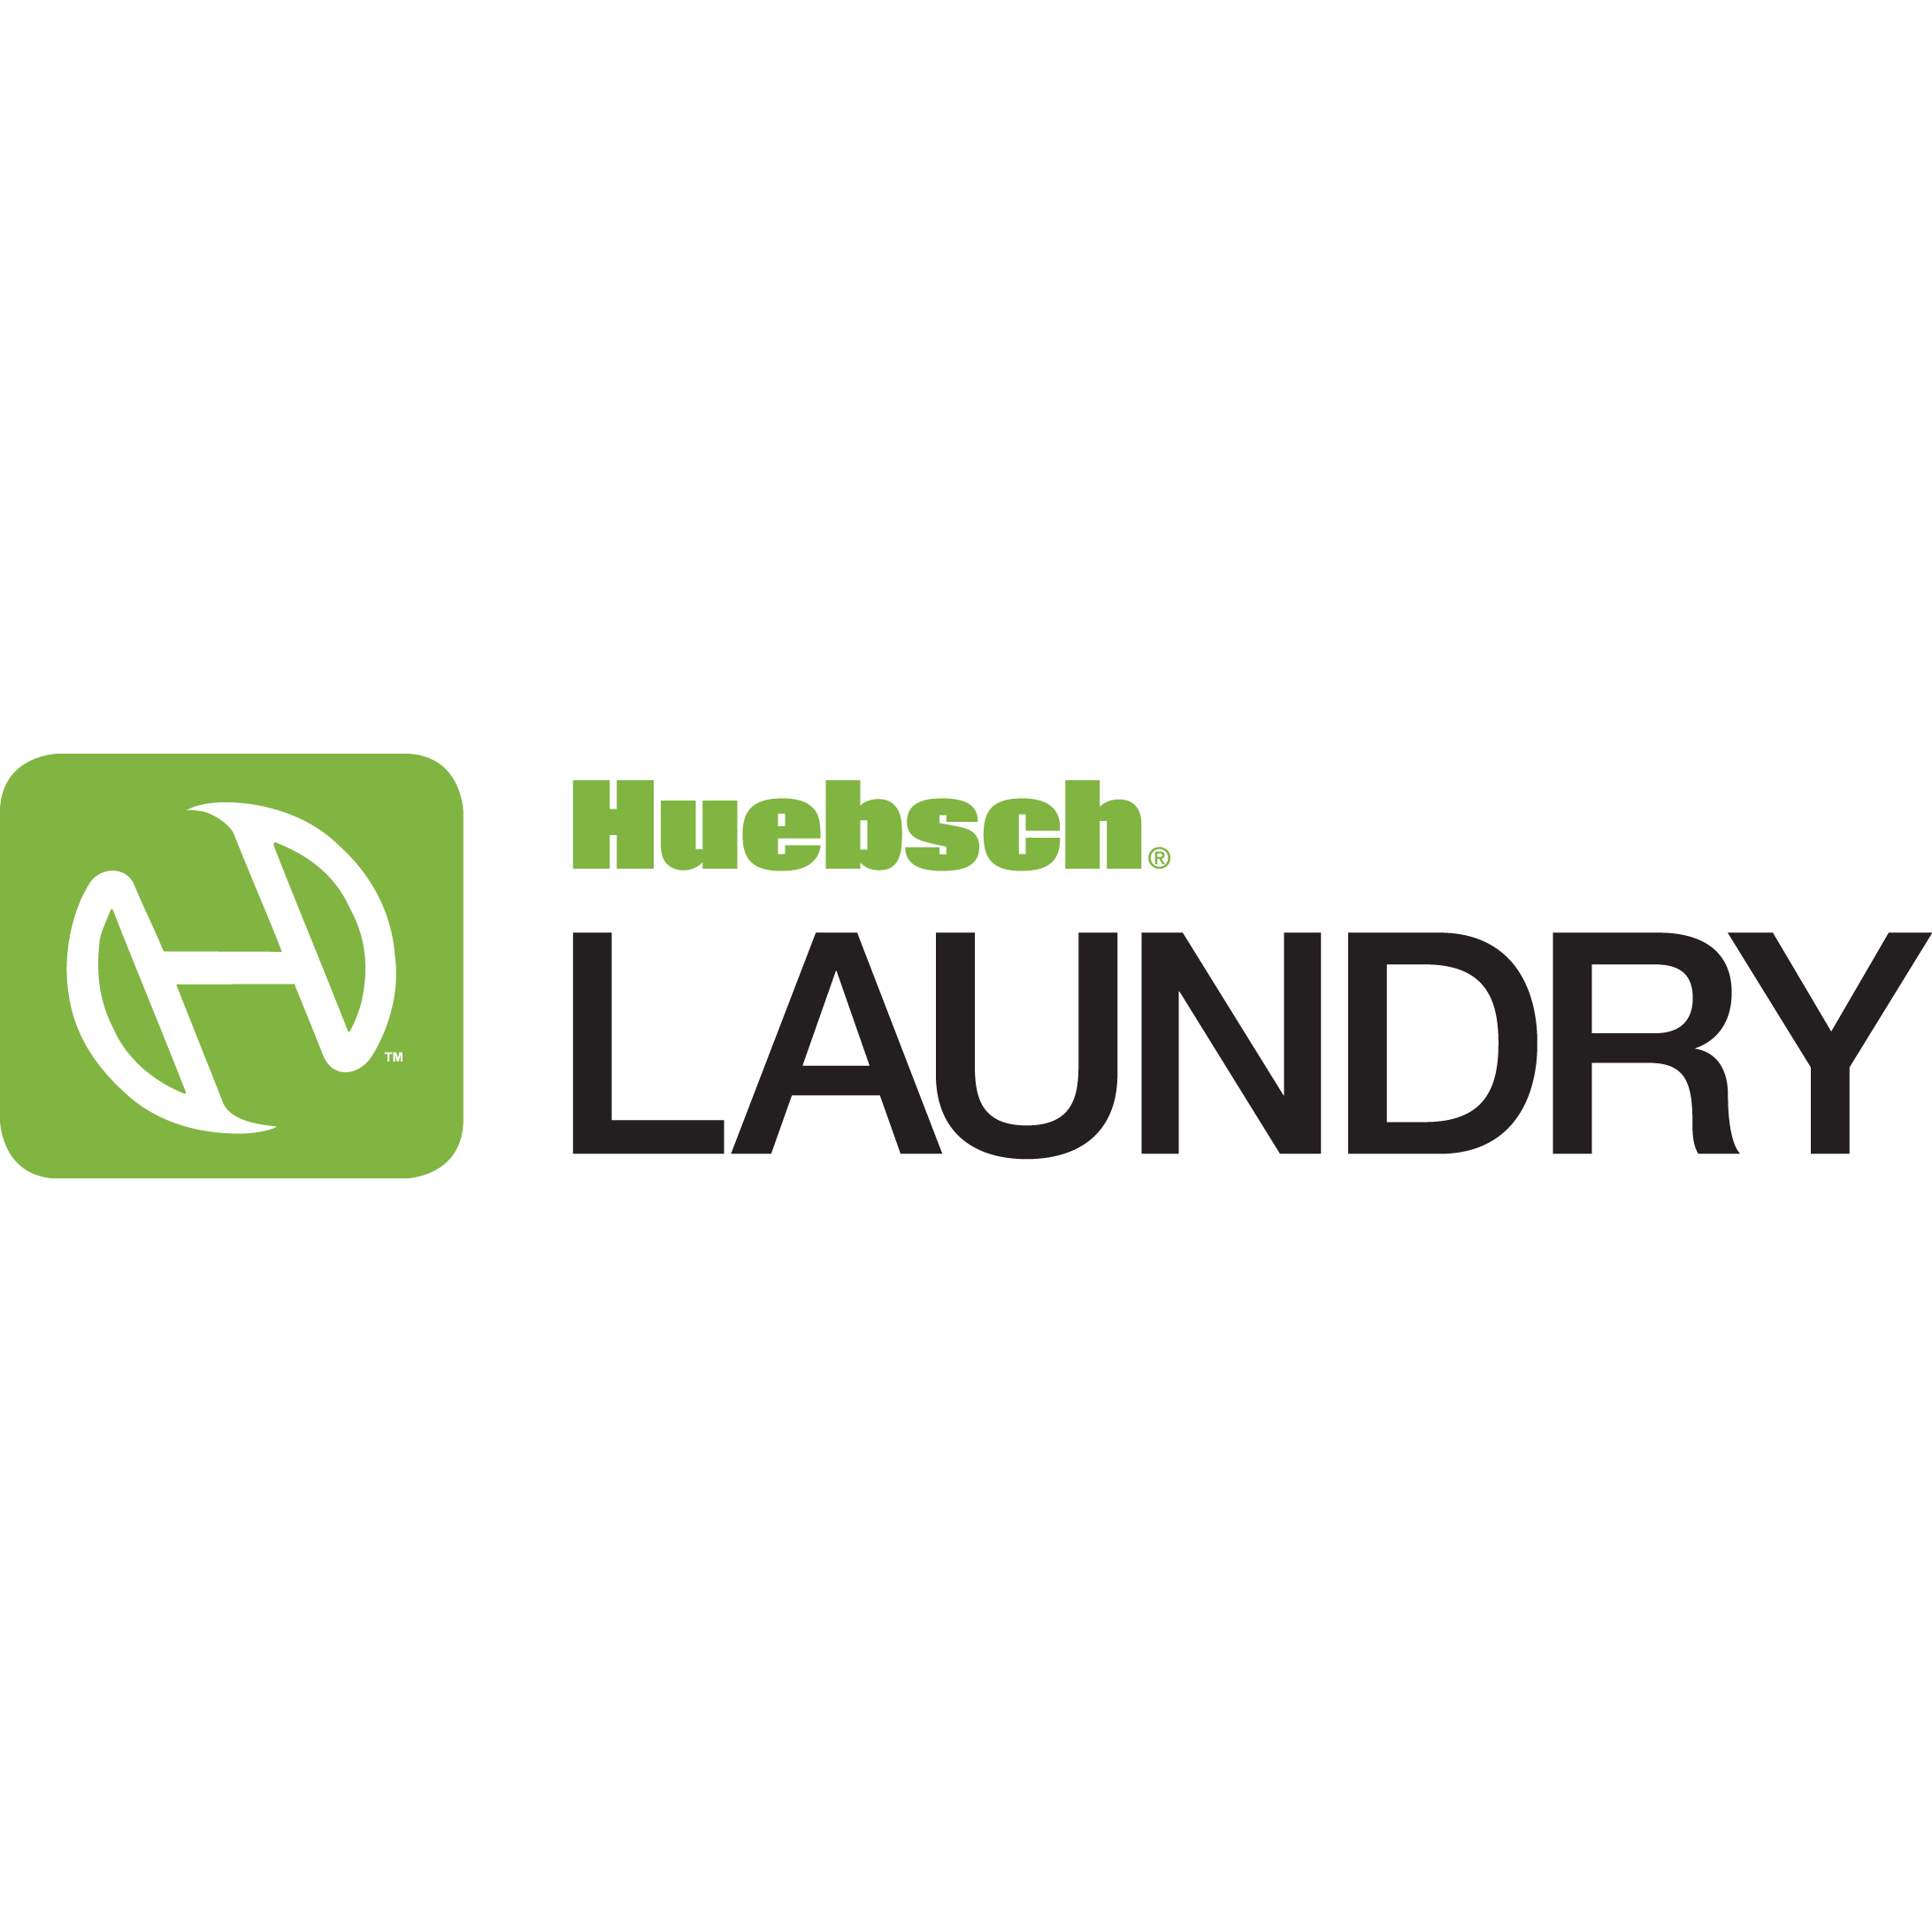 huebsch-laundry-in-houston-tx-77023-832-831-3656